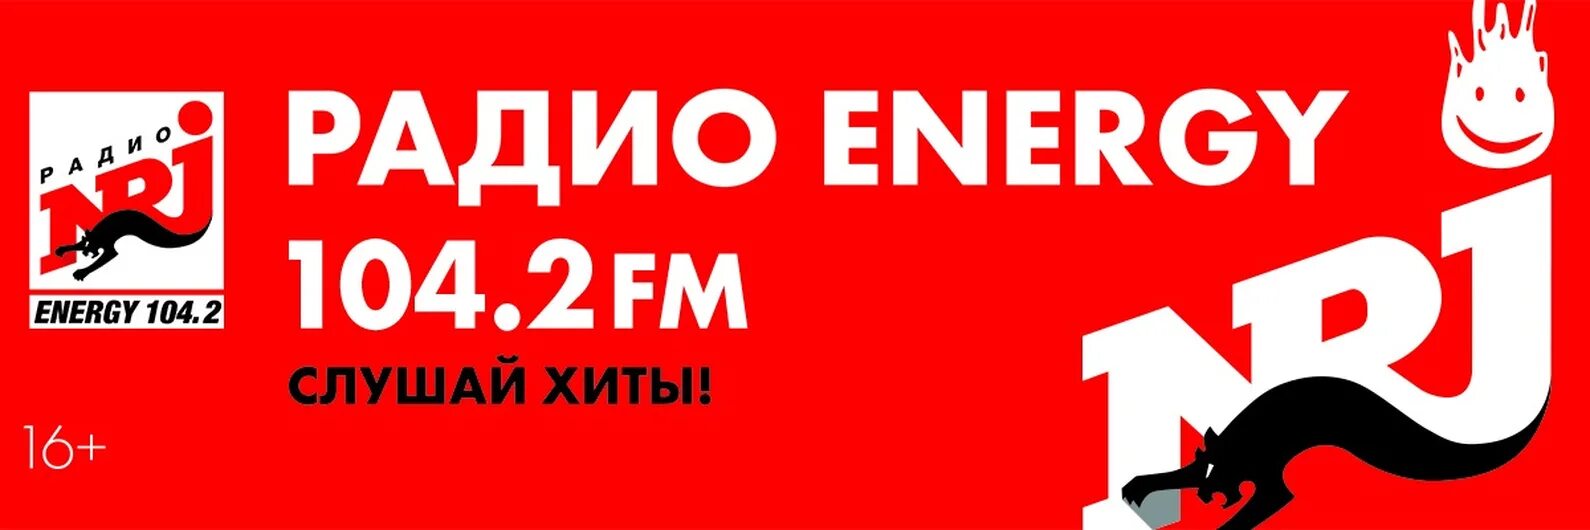 Радио энерджи частота в москве. Радио Энерджи. Радио Энерджи логотип. NRJ fm 104.2. Радио Energy частота.